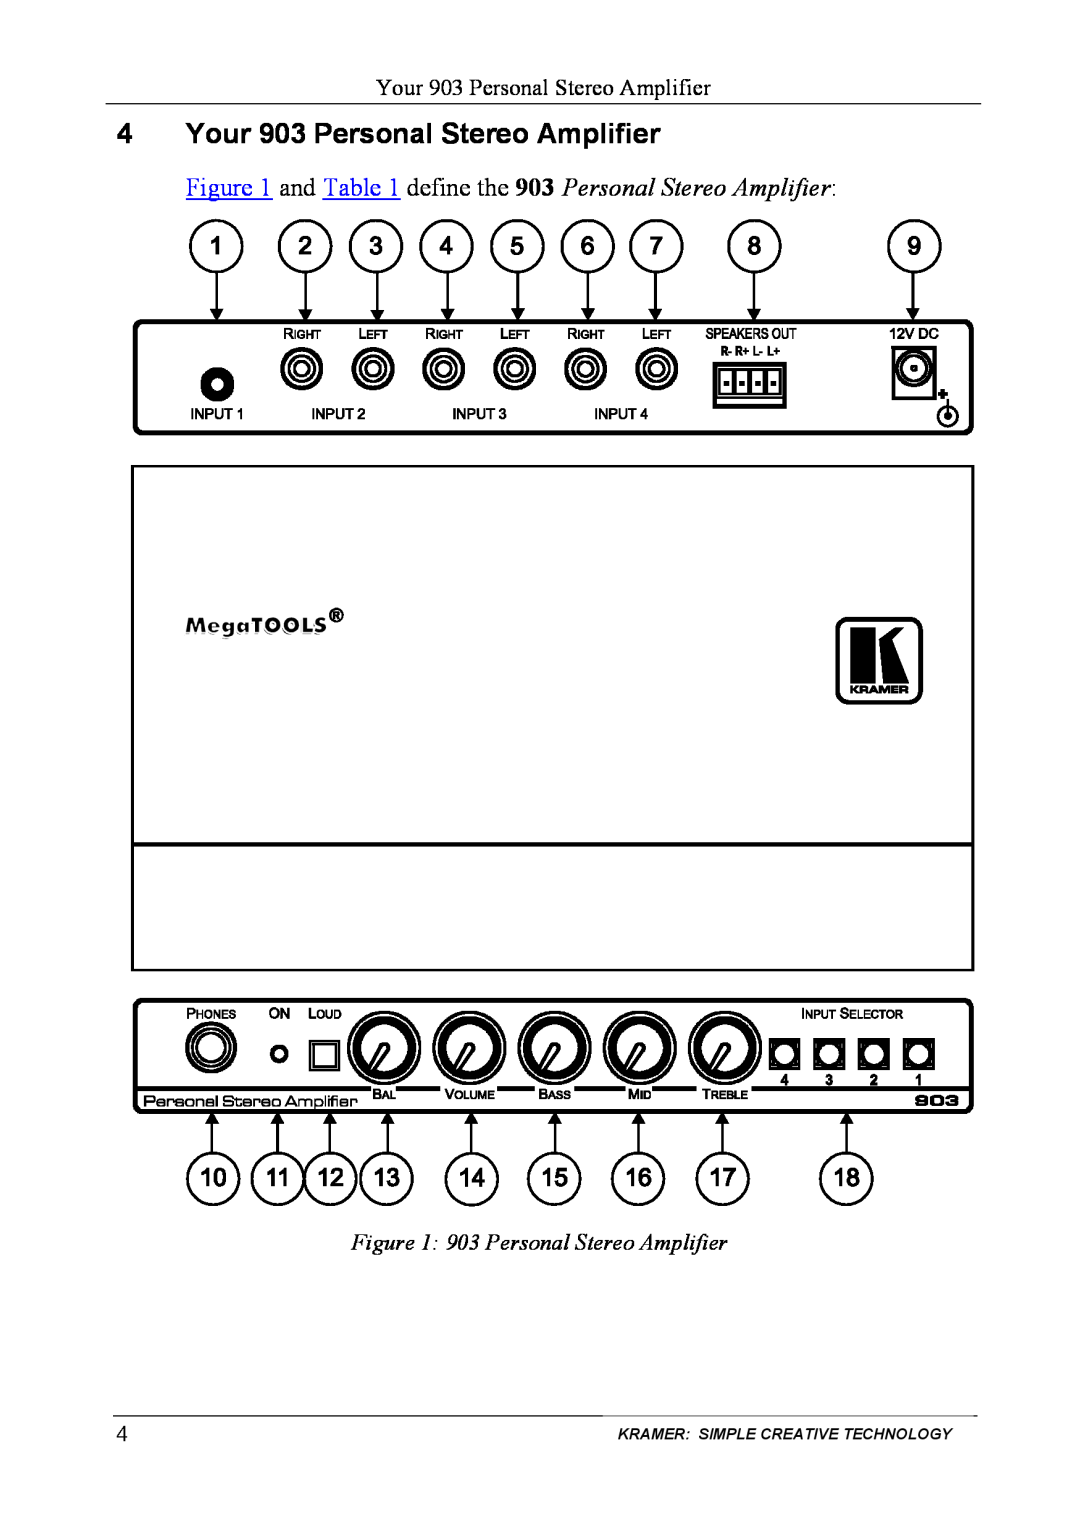 Kramer Electronics user manual 4Your 903 Personal Stereo Amplifier, Kramer Simple Creative Technology 